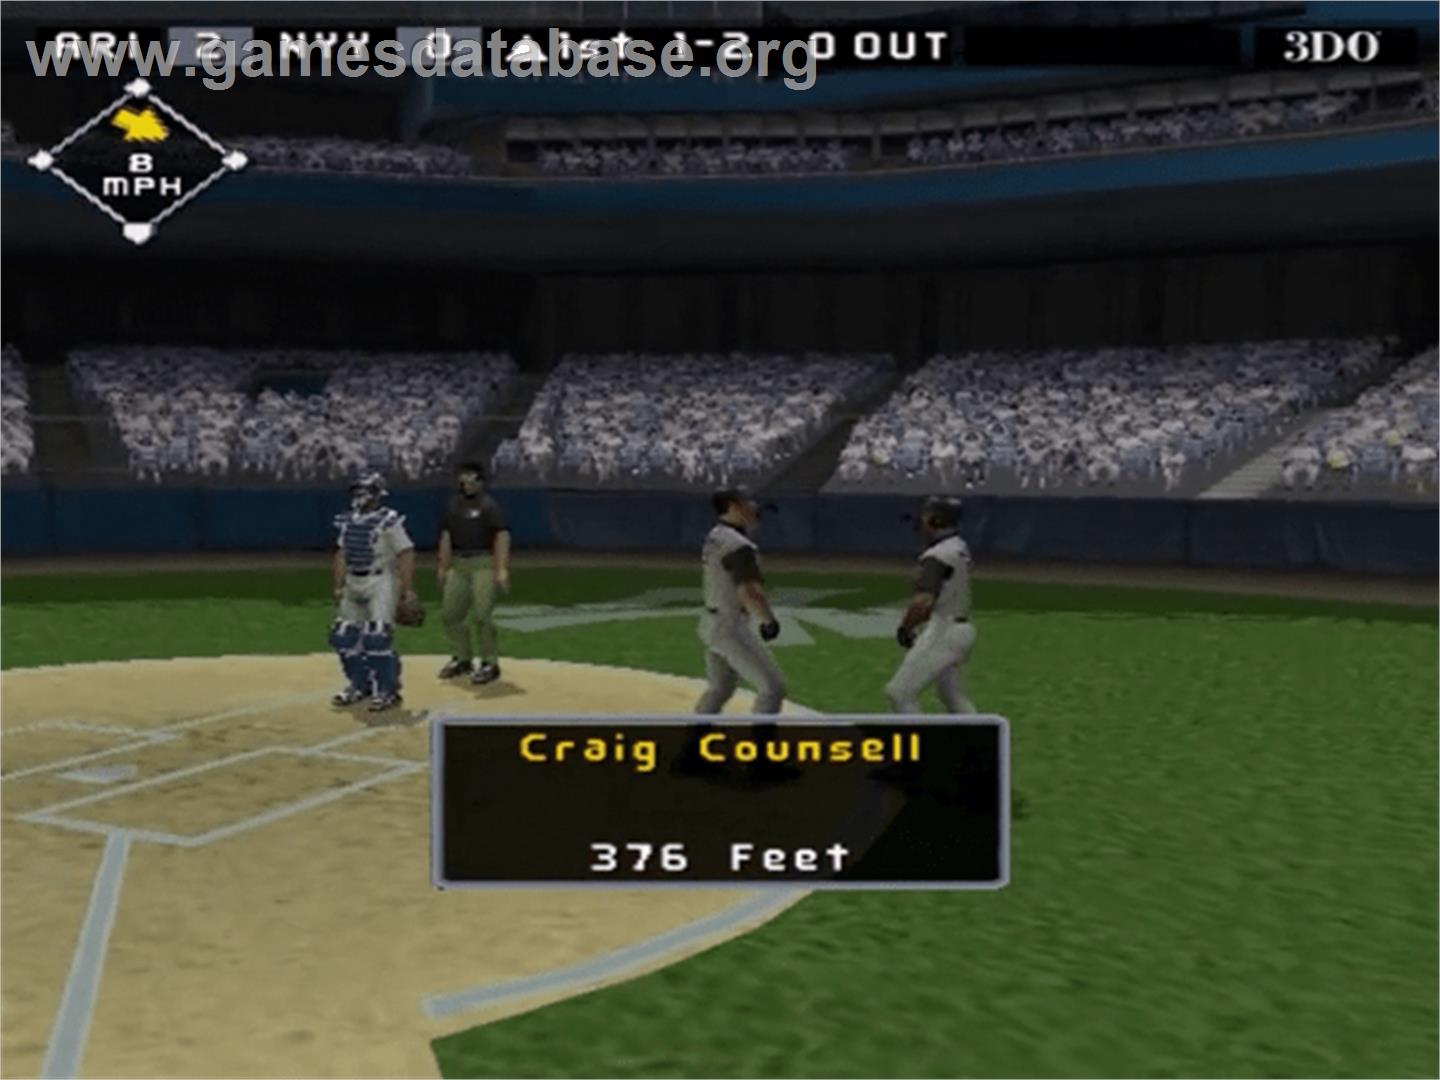 High Heat Major League Baseball 2003 - Sony Playstation 2 - Artwork - In Game